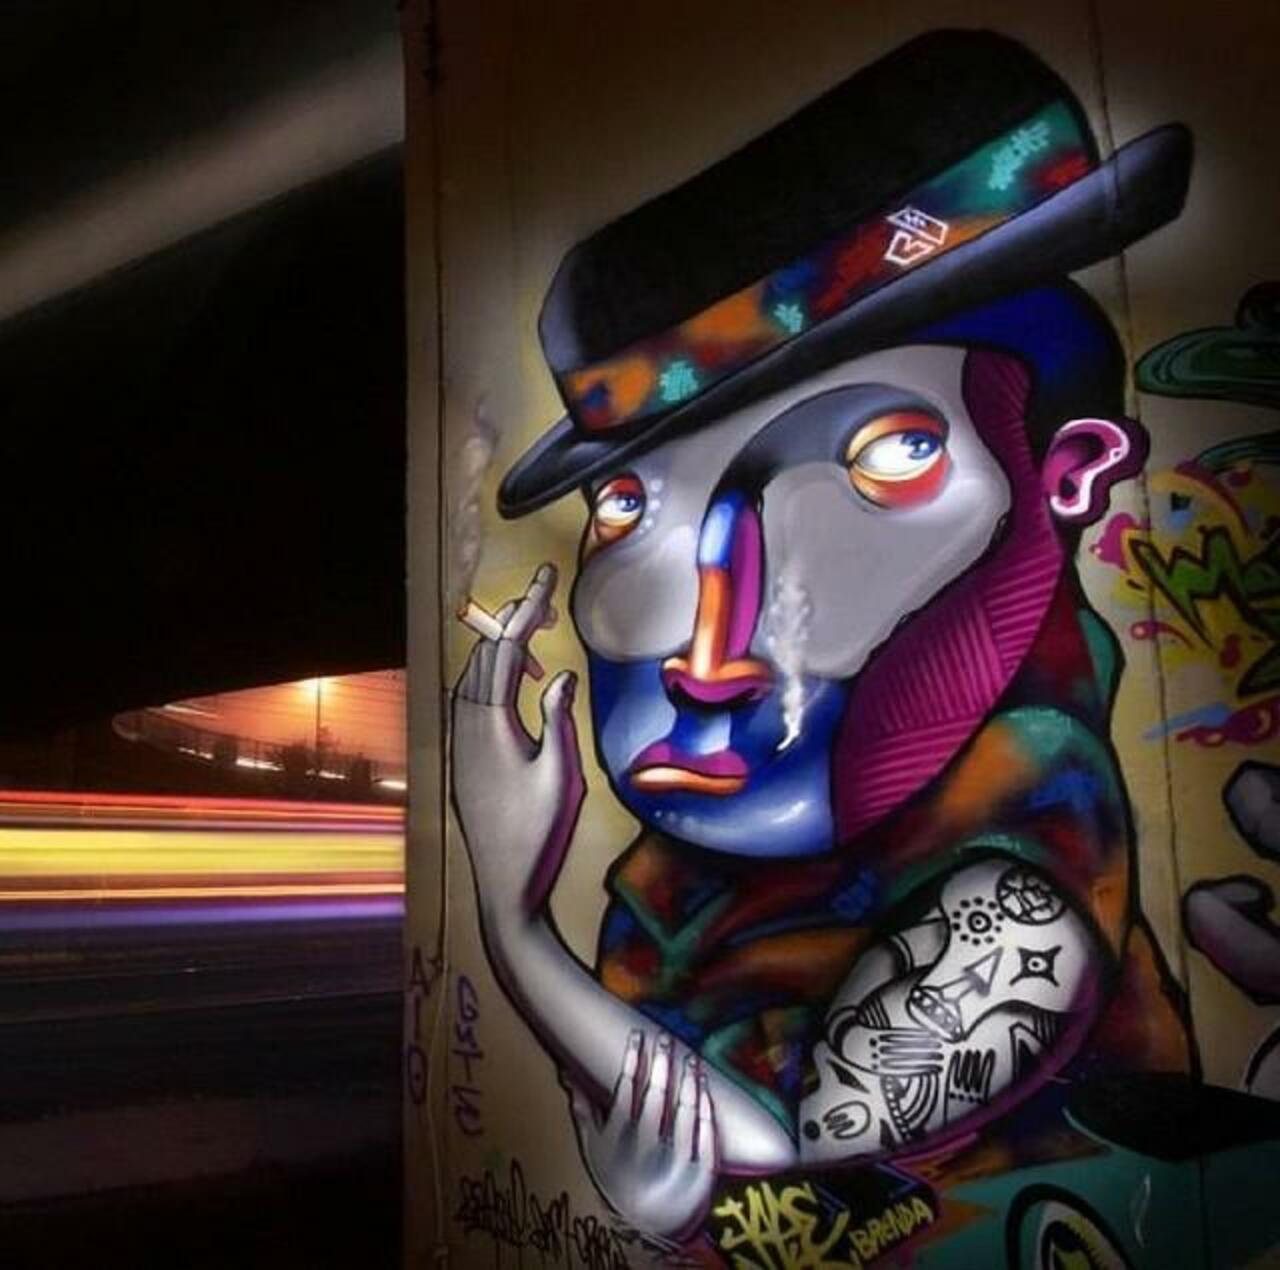 Abstract Street Art by Jade Rivera 

#art #mural #graffiti #streetart http://t.co/0t8uDpccfc